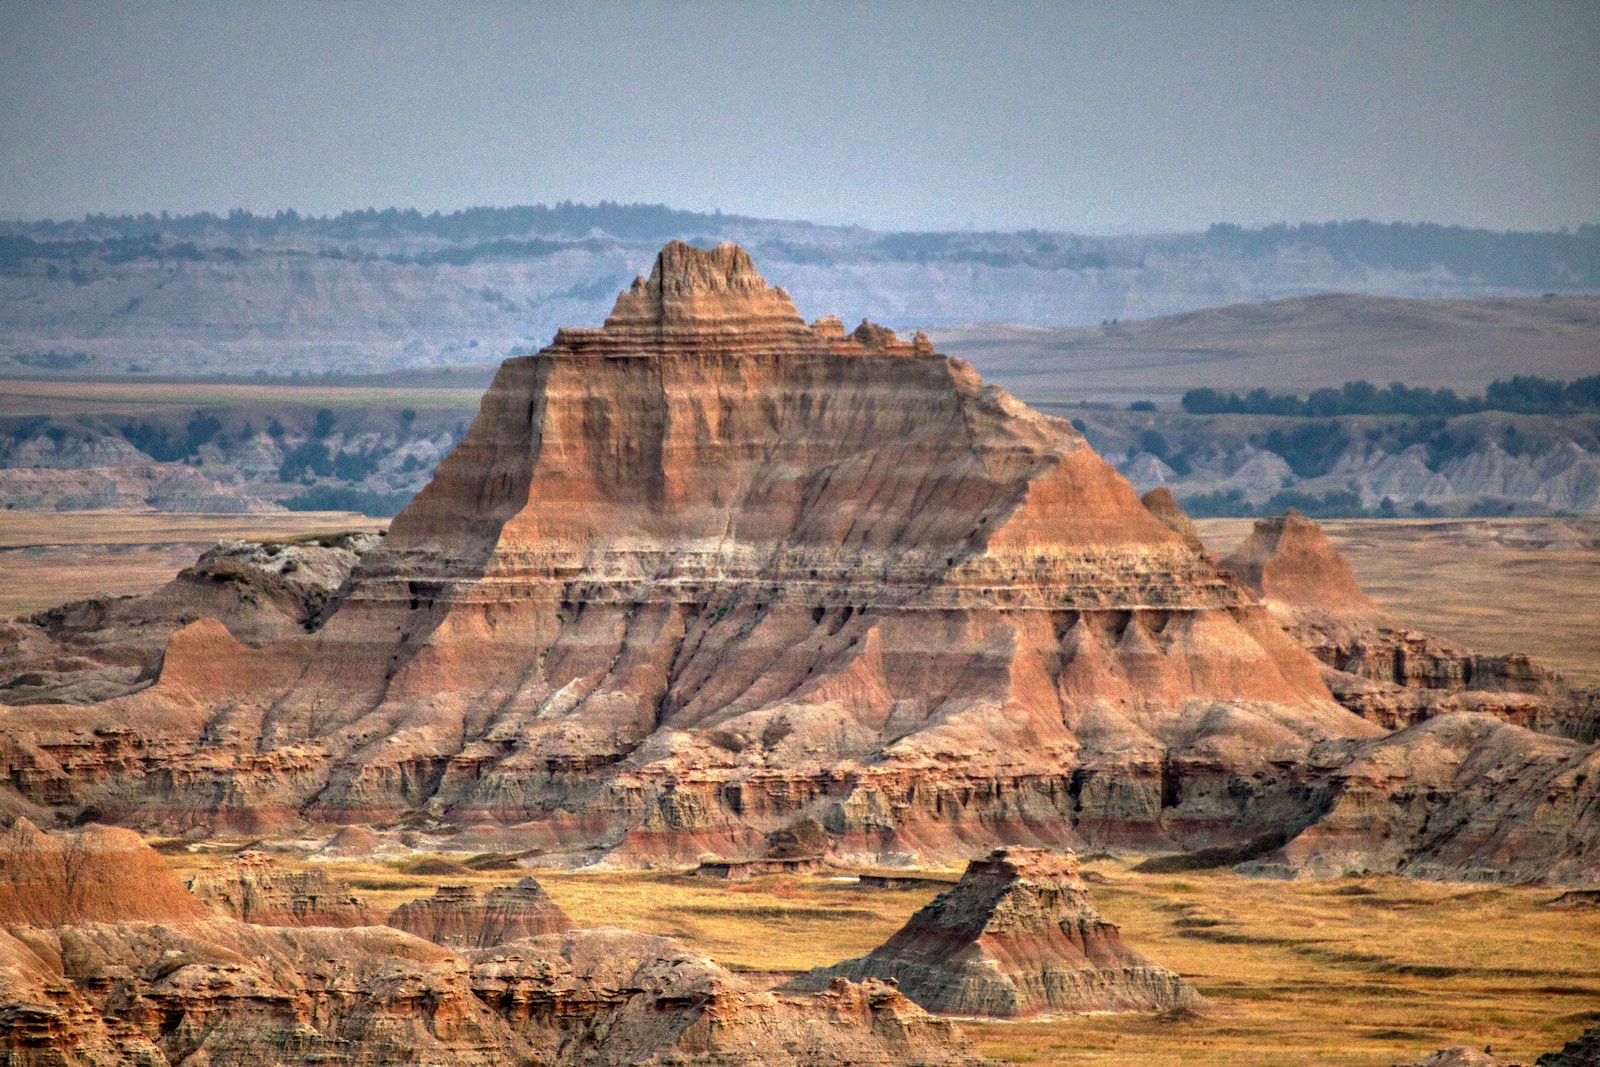 South Dakota: brown rock formation near body of water during daytime